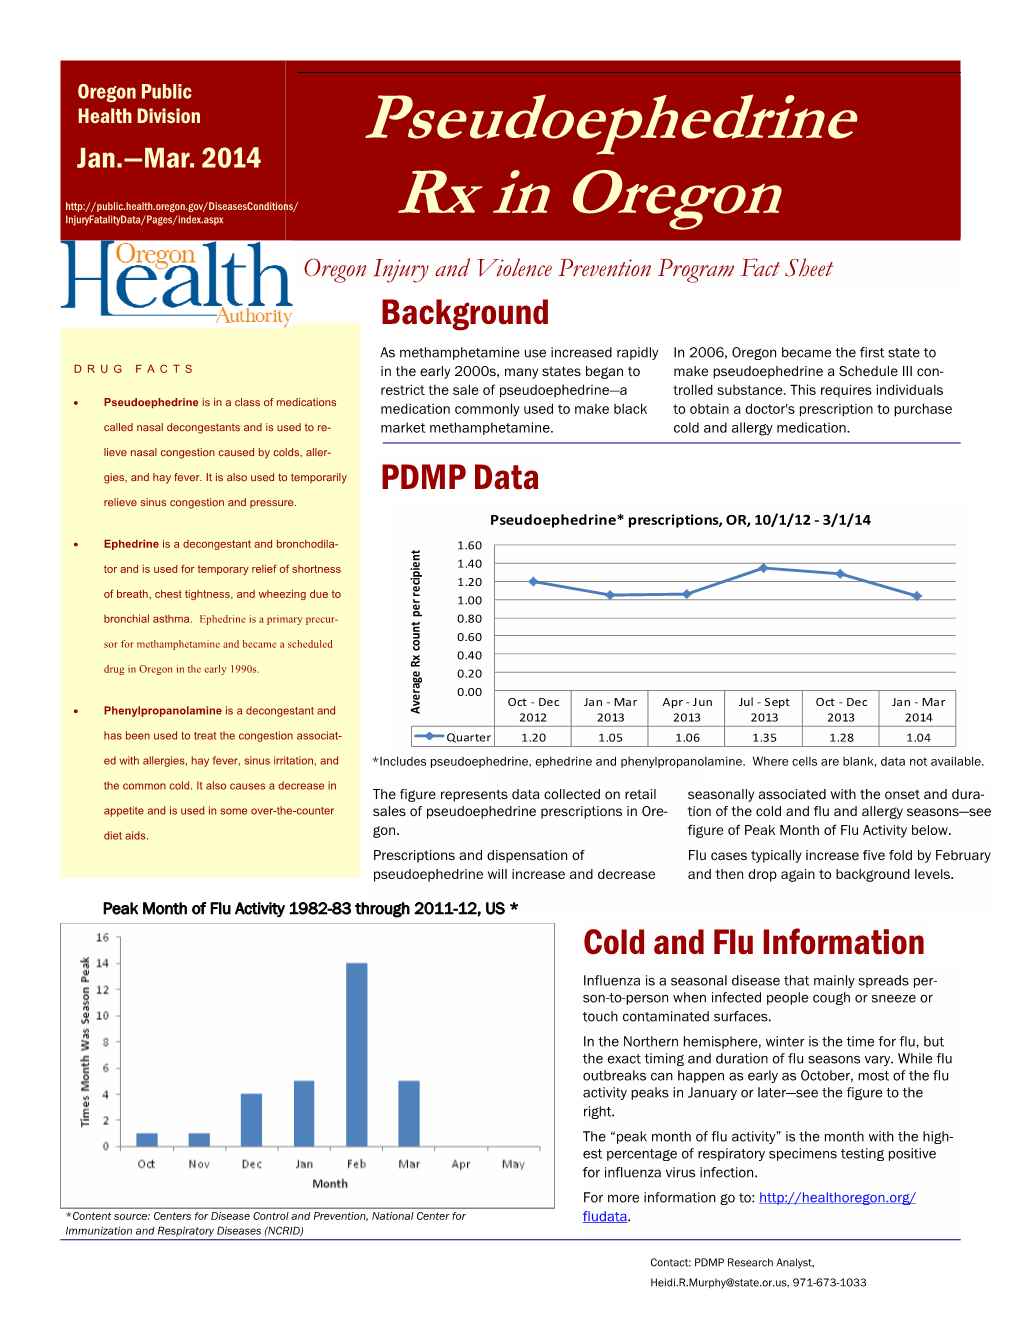 Pseudoephedrine Rx in Oregon Fact Sheet (Pdf)